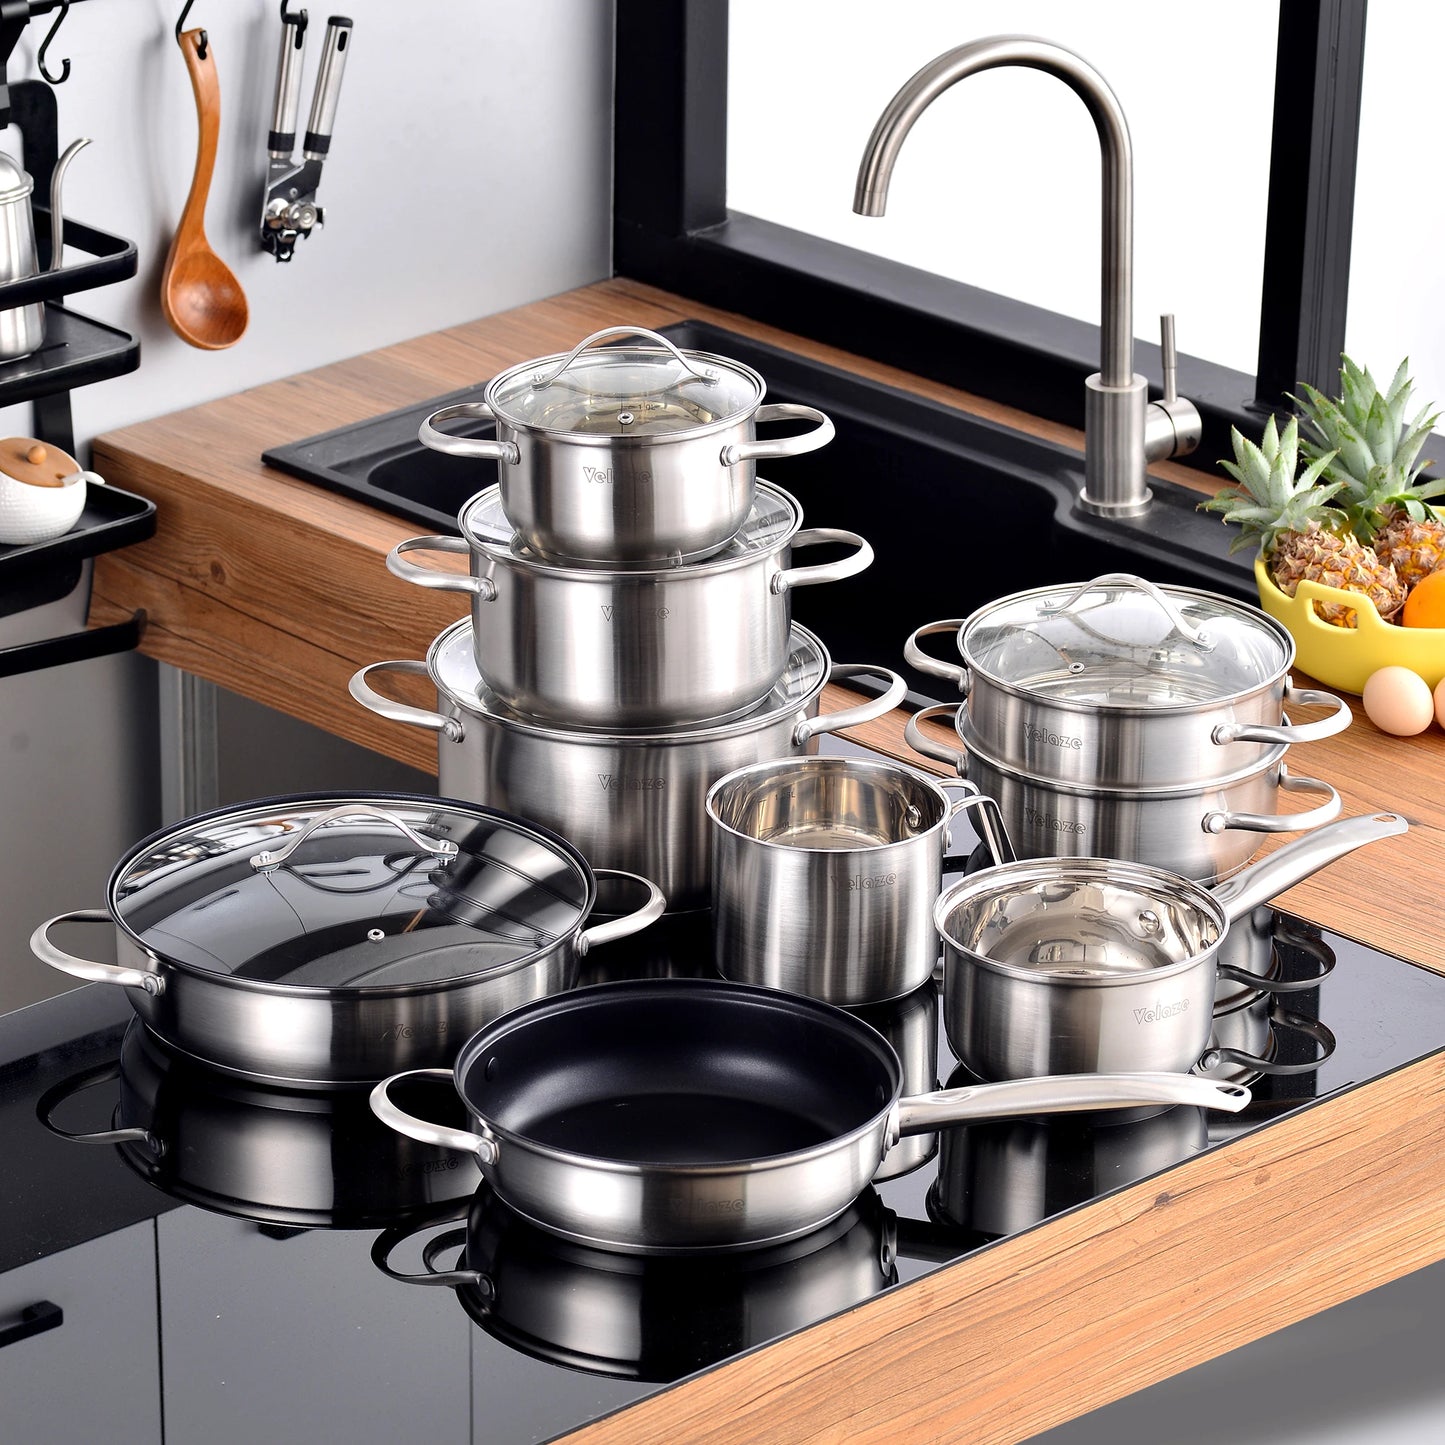 Velaze Stainless Steel Cookware Set - Versatile Induction Ready